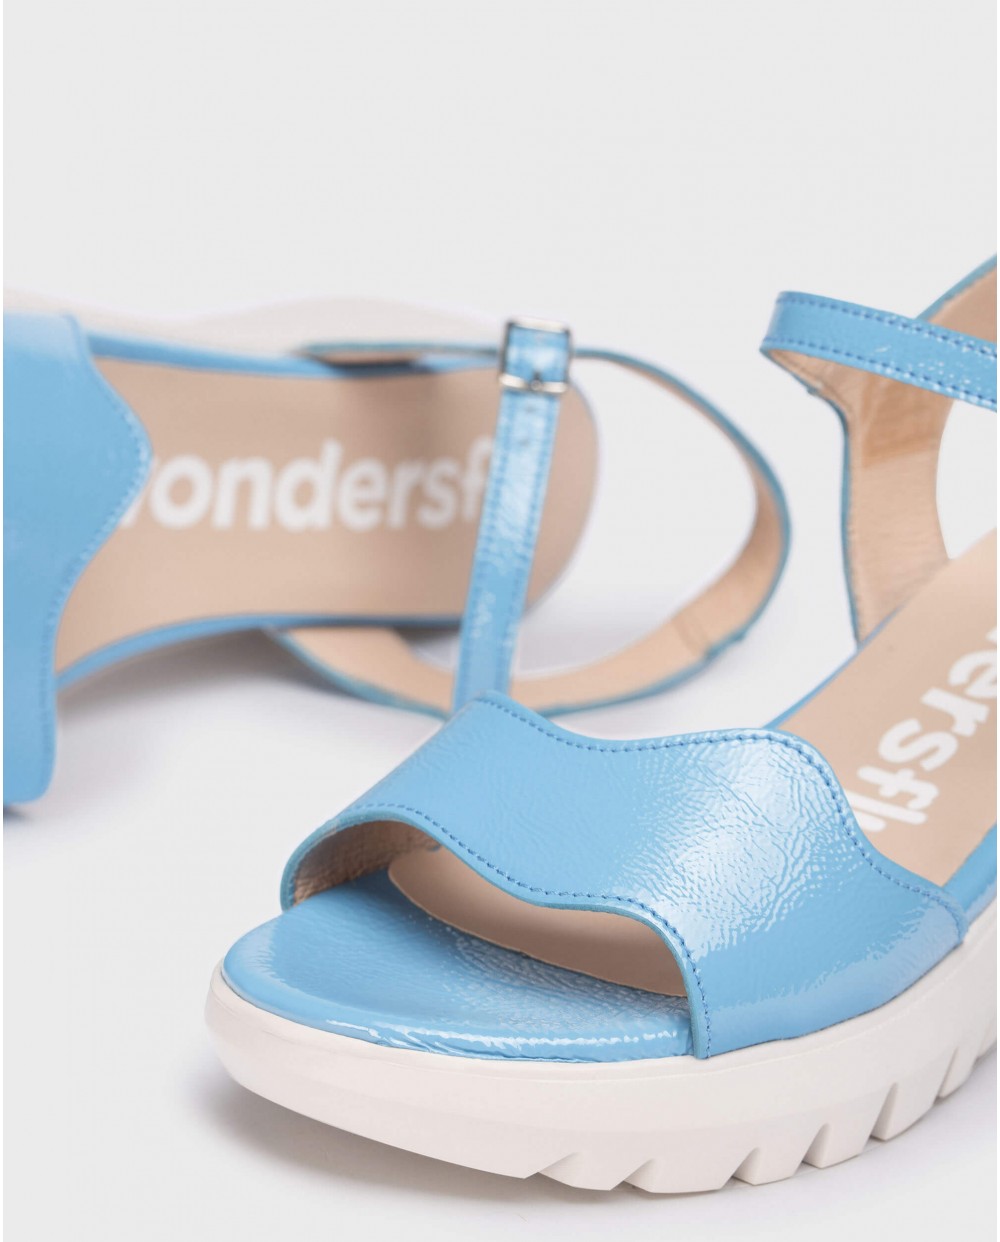 Wonders-Sandals-Patent leather wave sandal